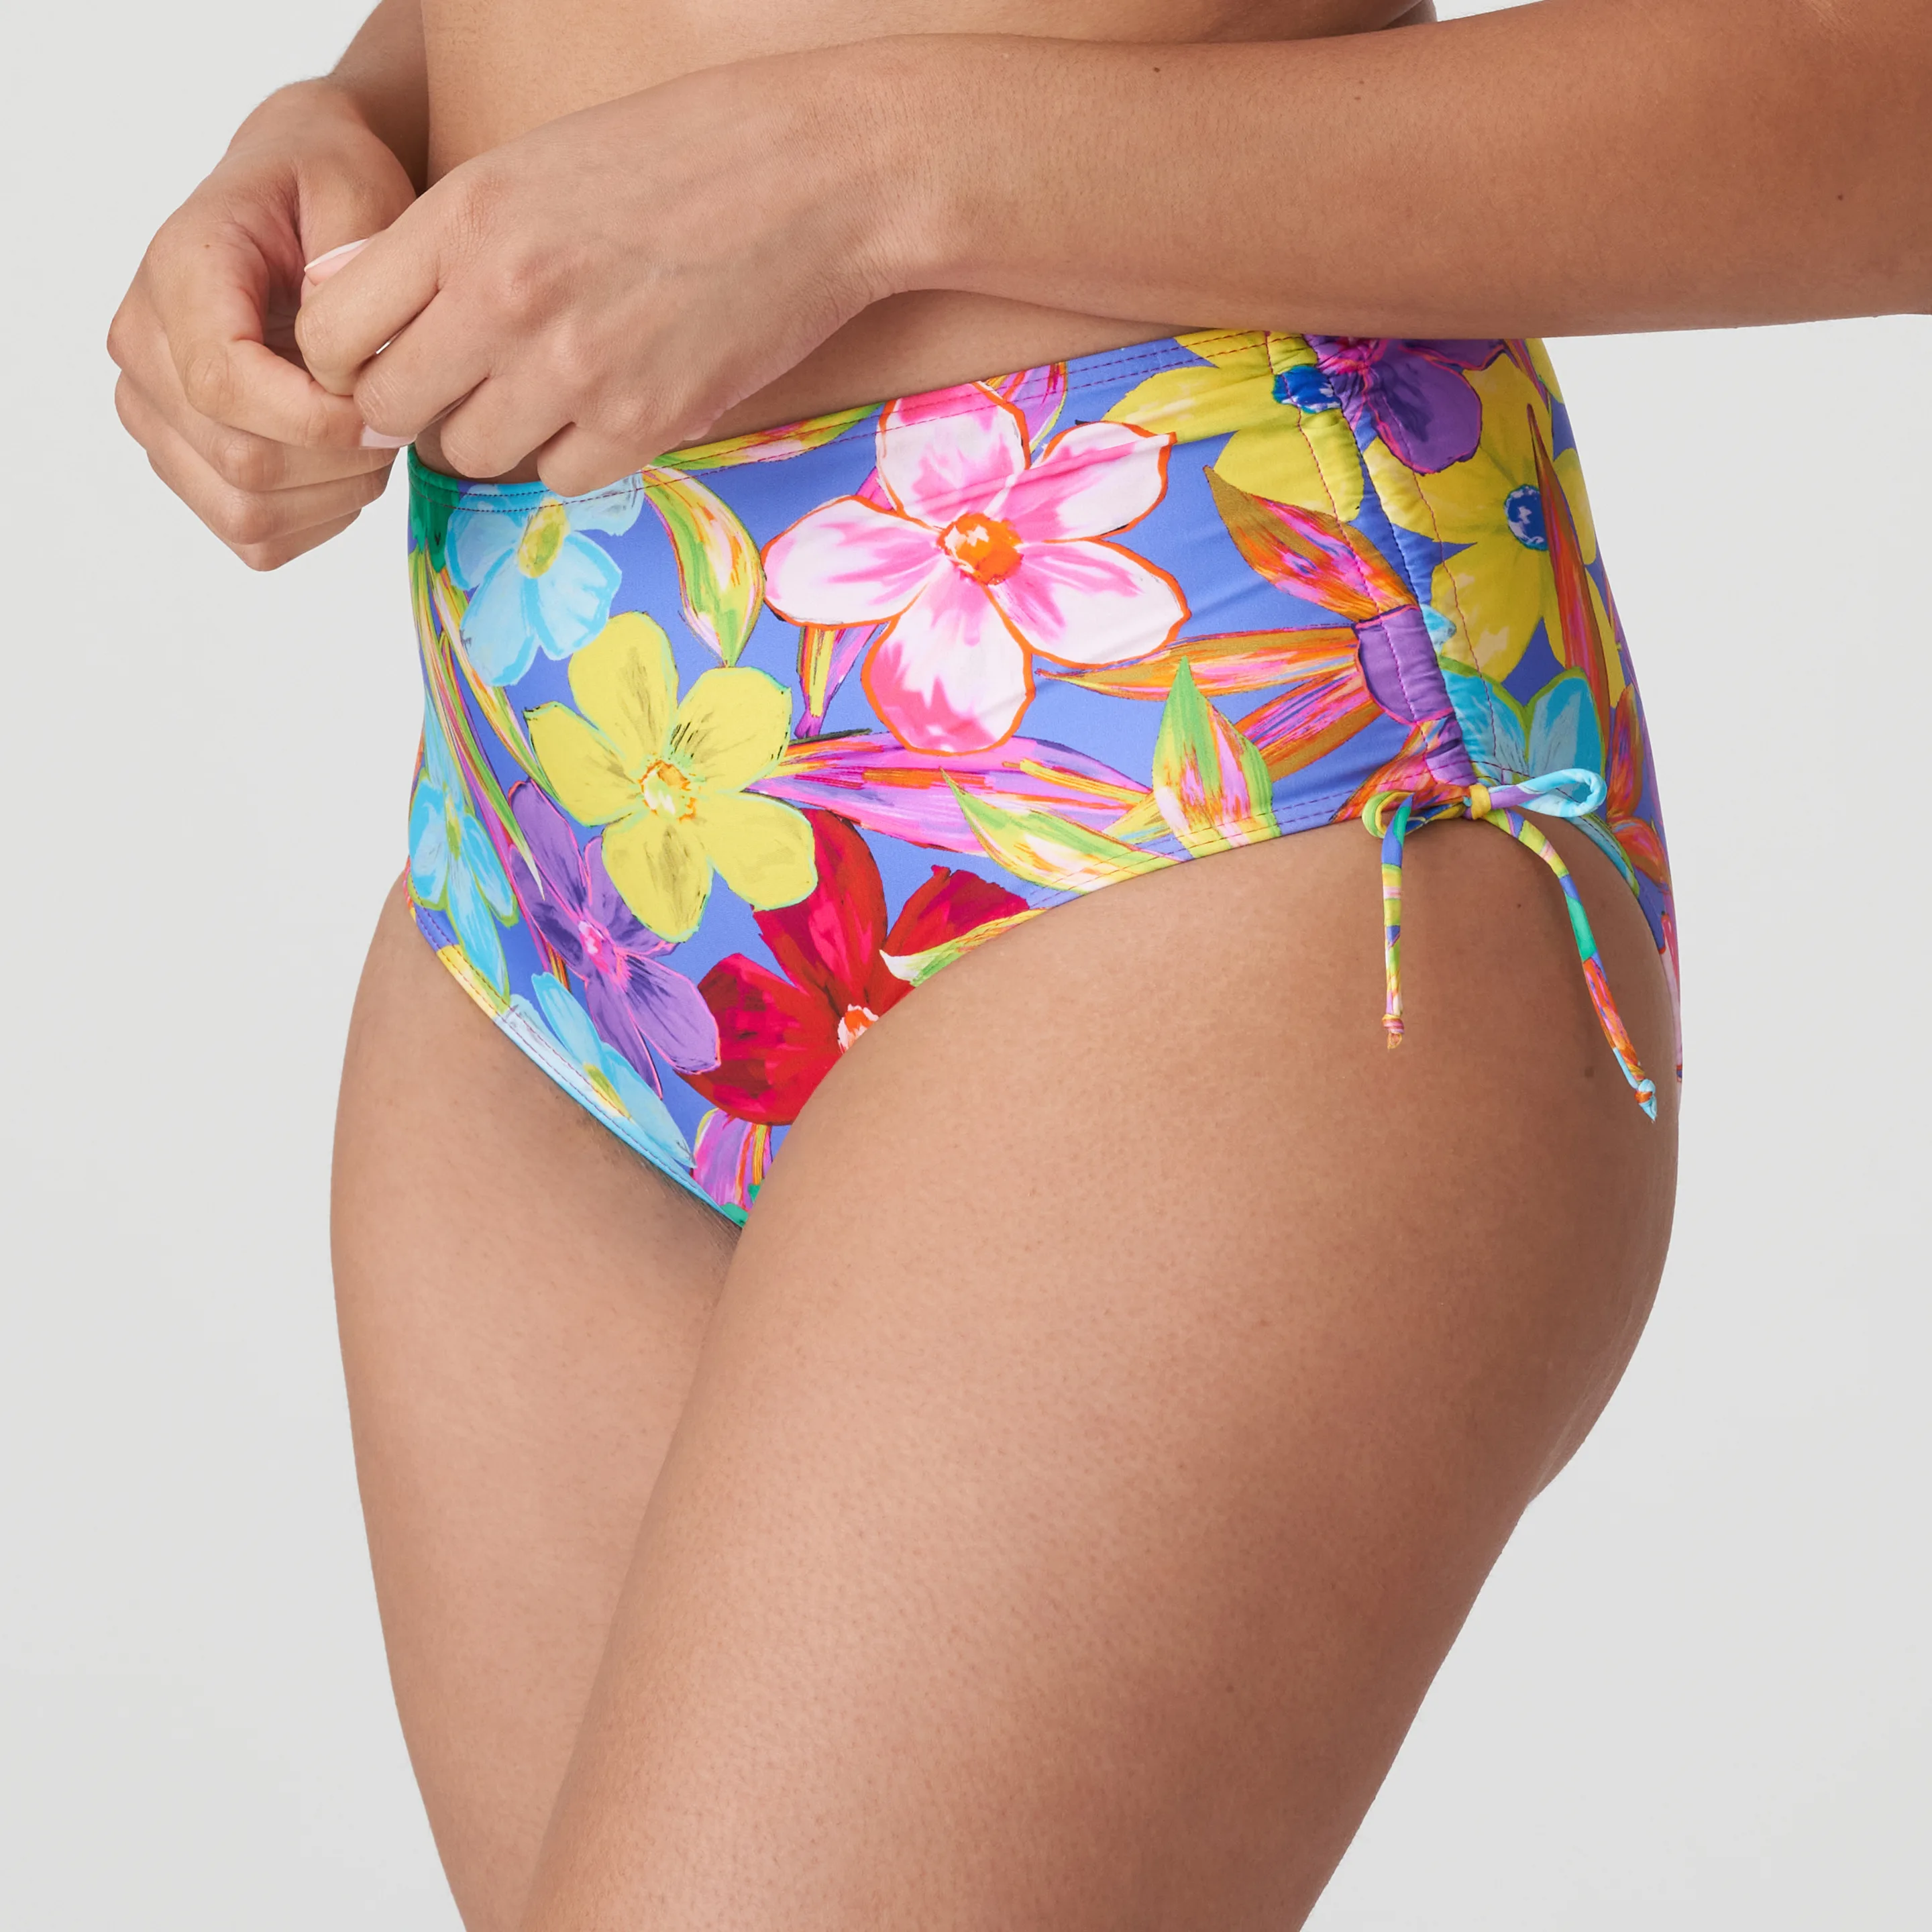 PrimaDonna Sazan Blue Bloom bikini full briefs ropes | Rigby Peller United States